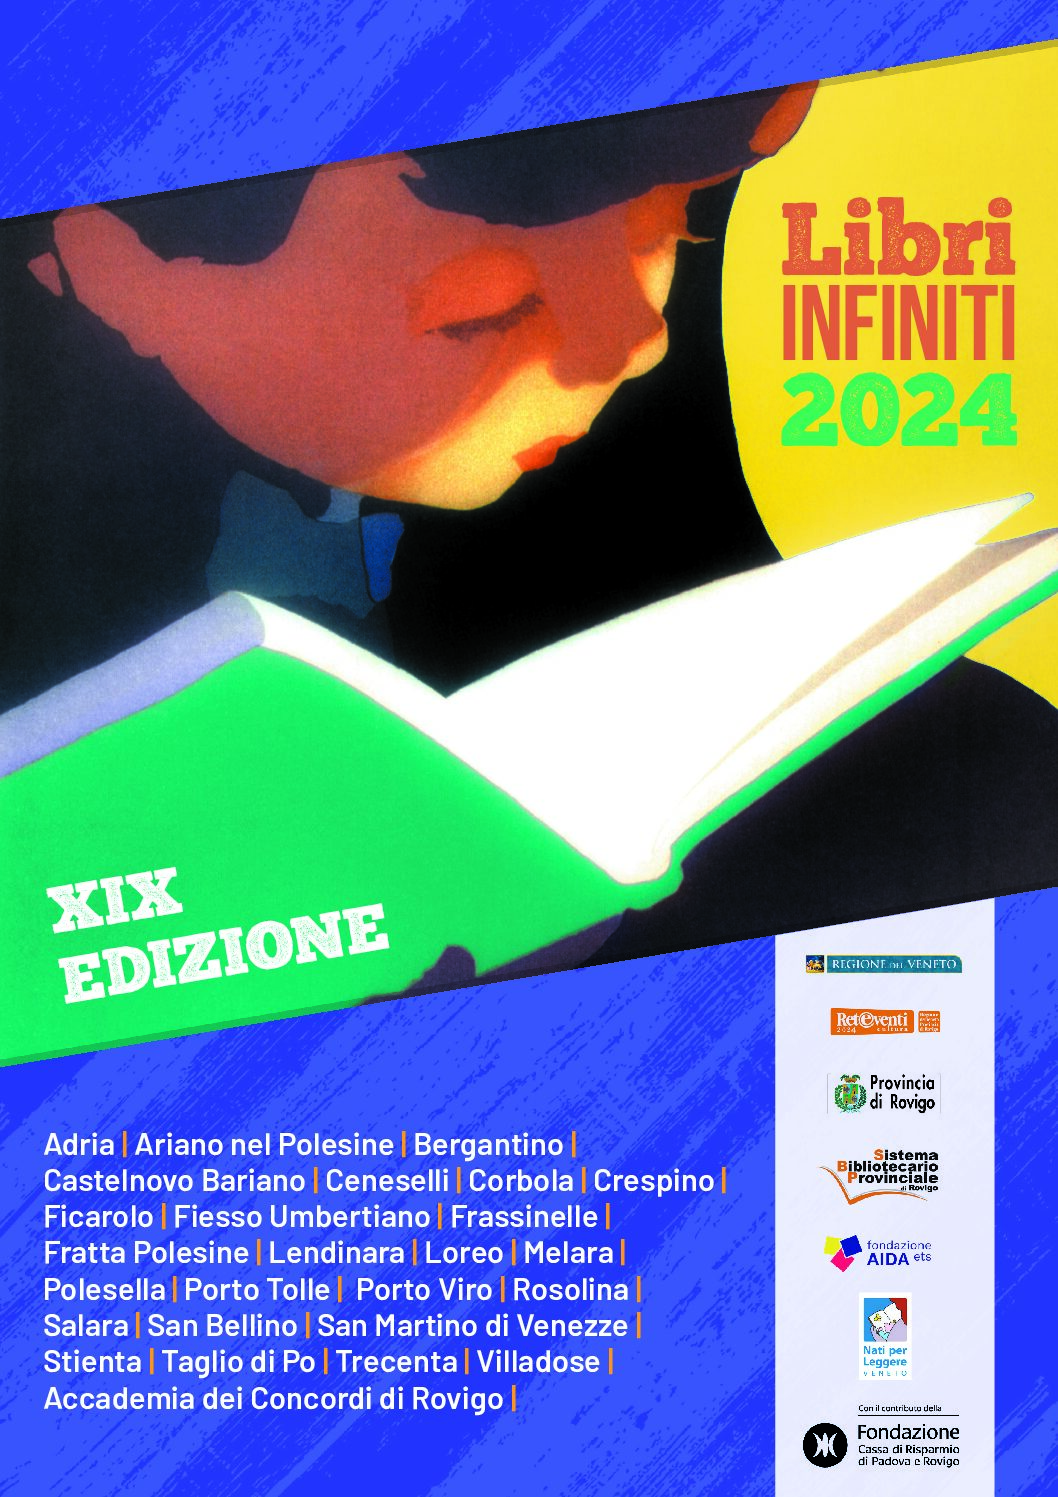 Libri Infiniti 2024